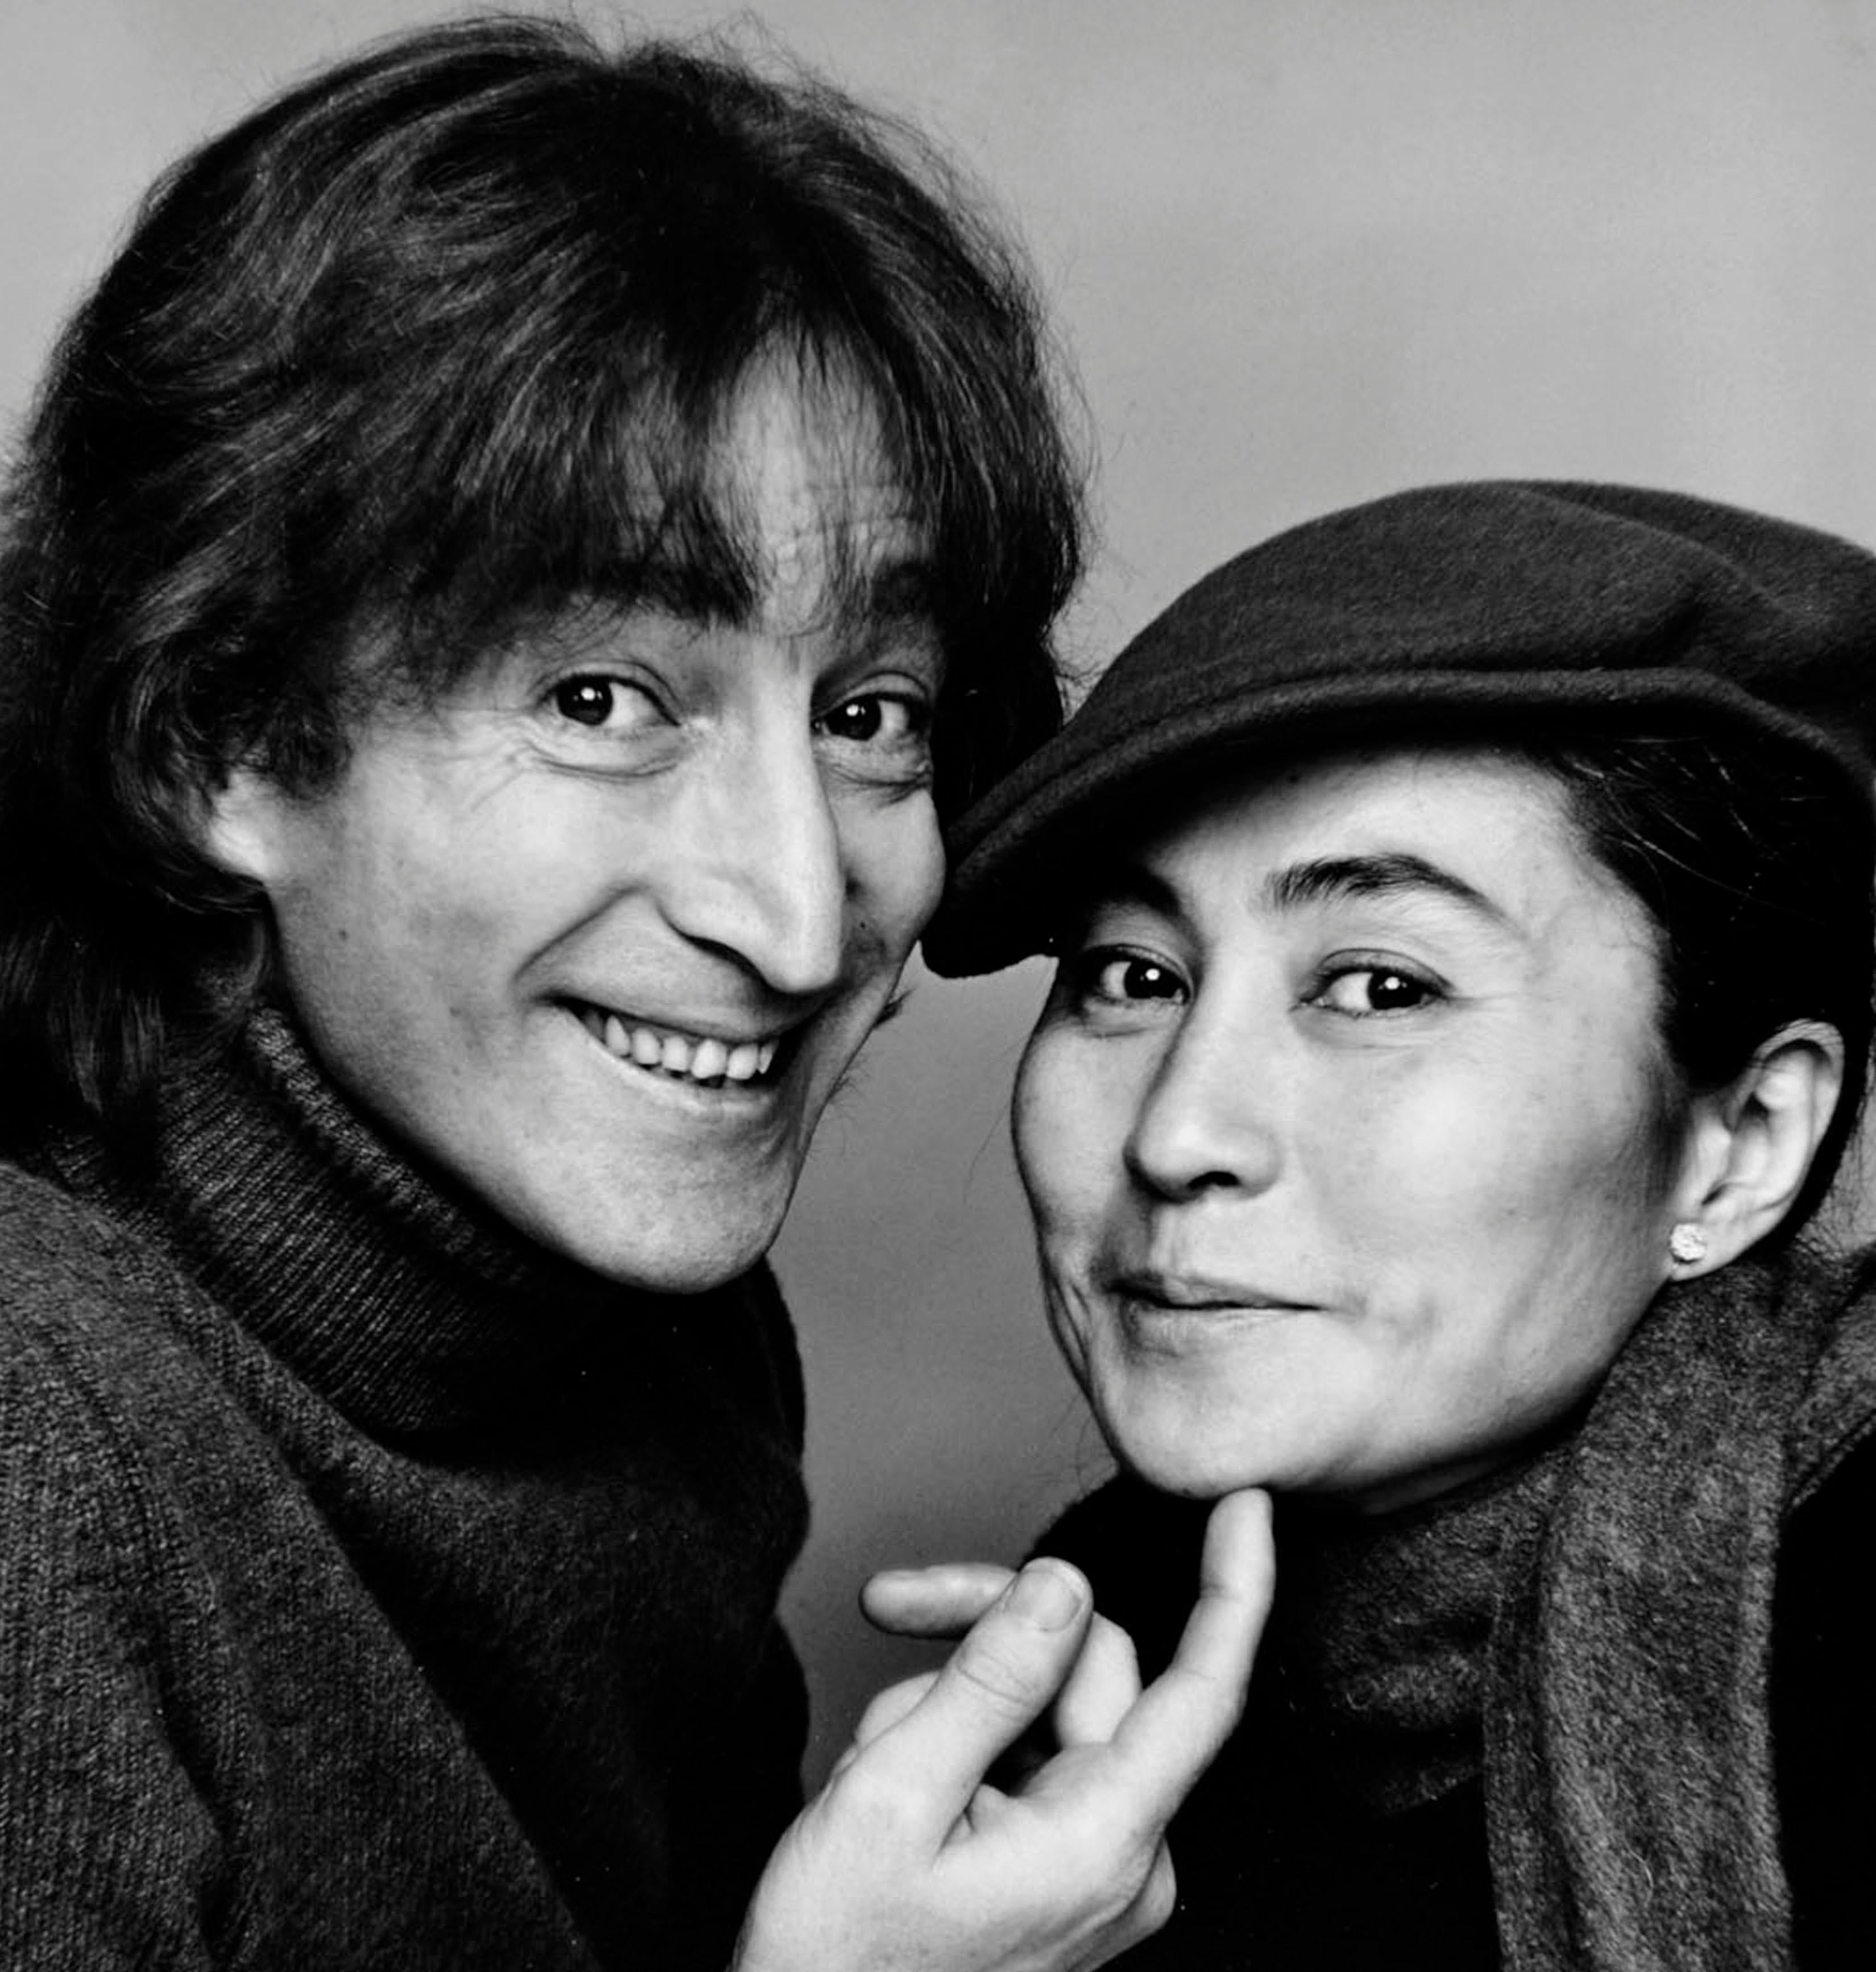 John Lennon und Yoko Ono fotografiert am 2. November, signiert – Photograph von Jack Mitchell